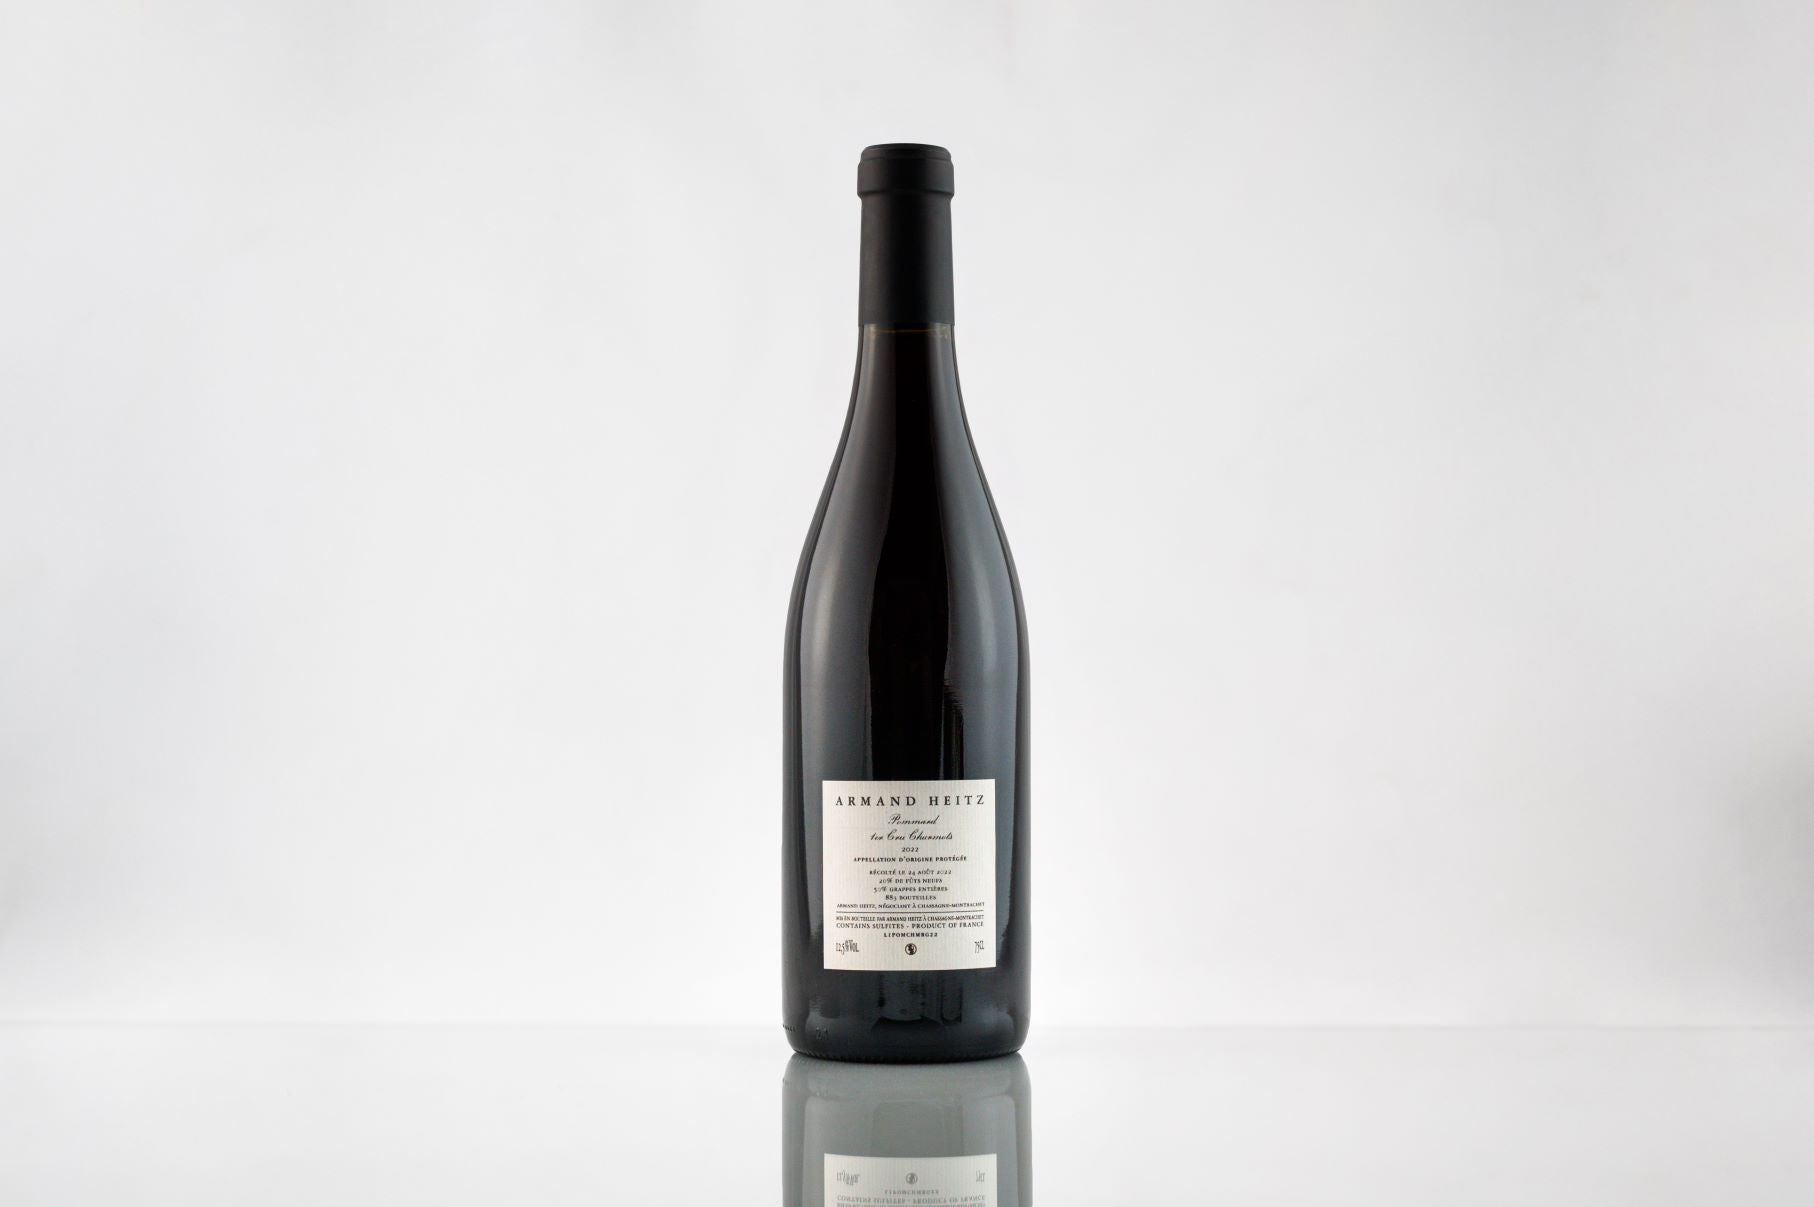 Pinot Noir - Vin de France